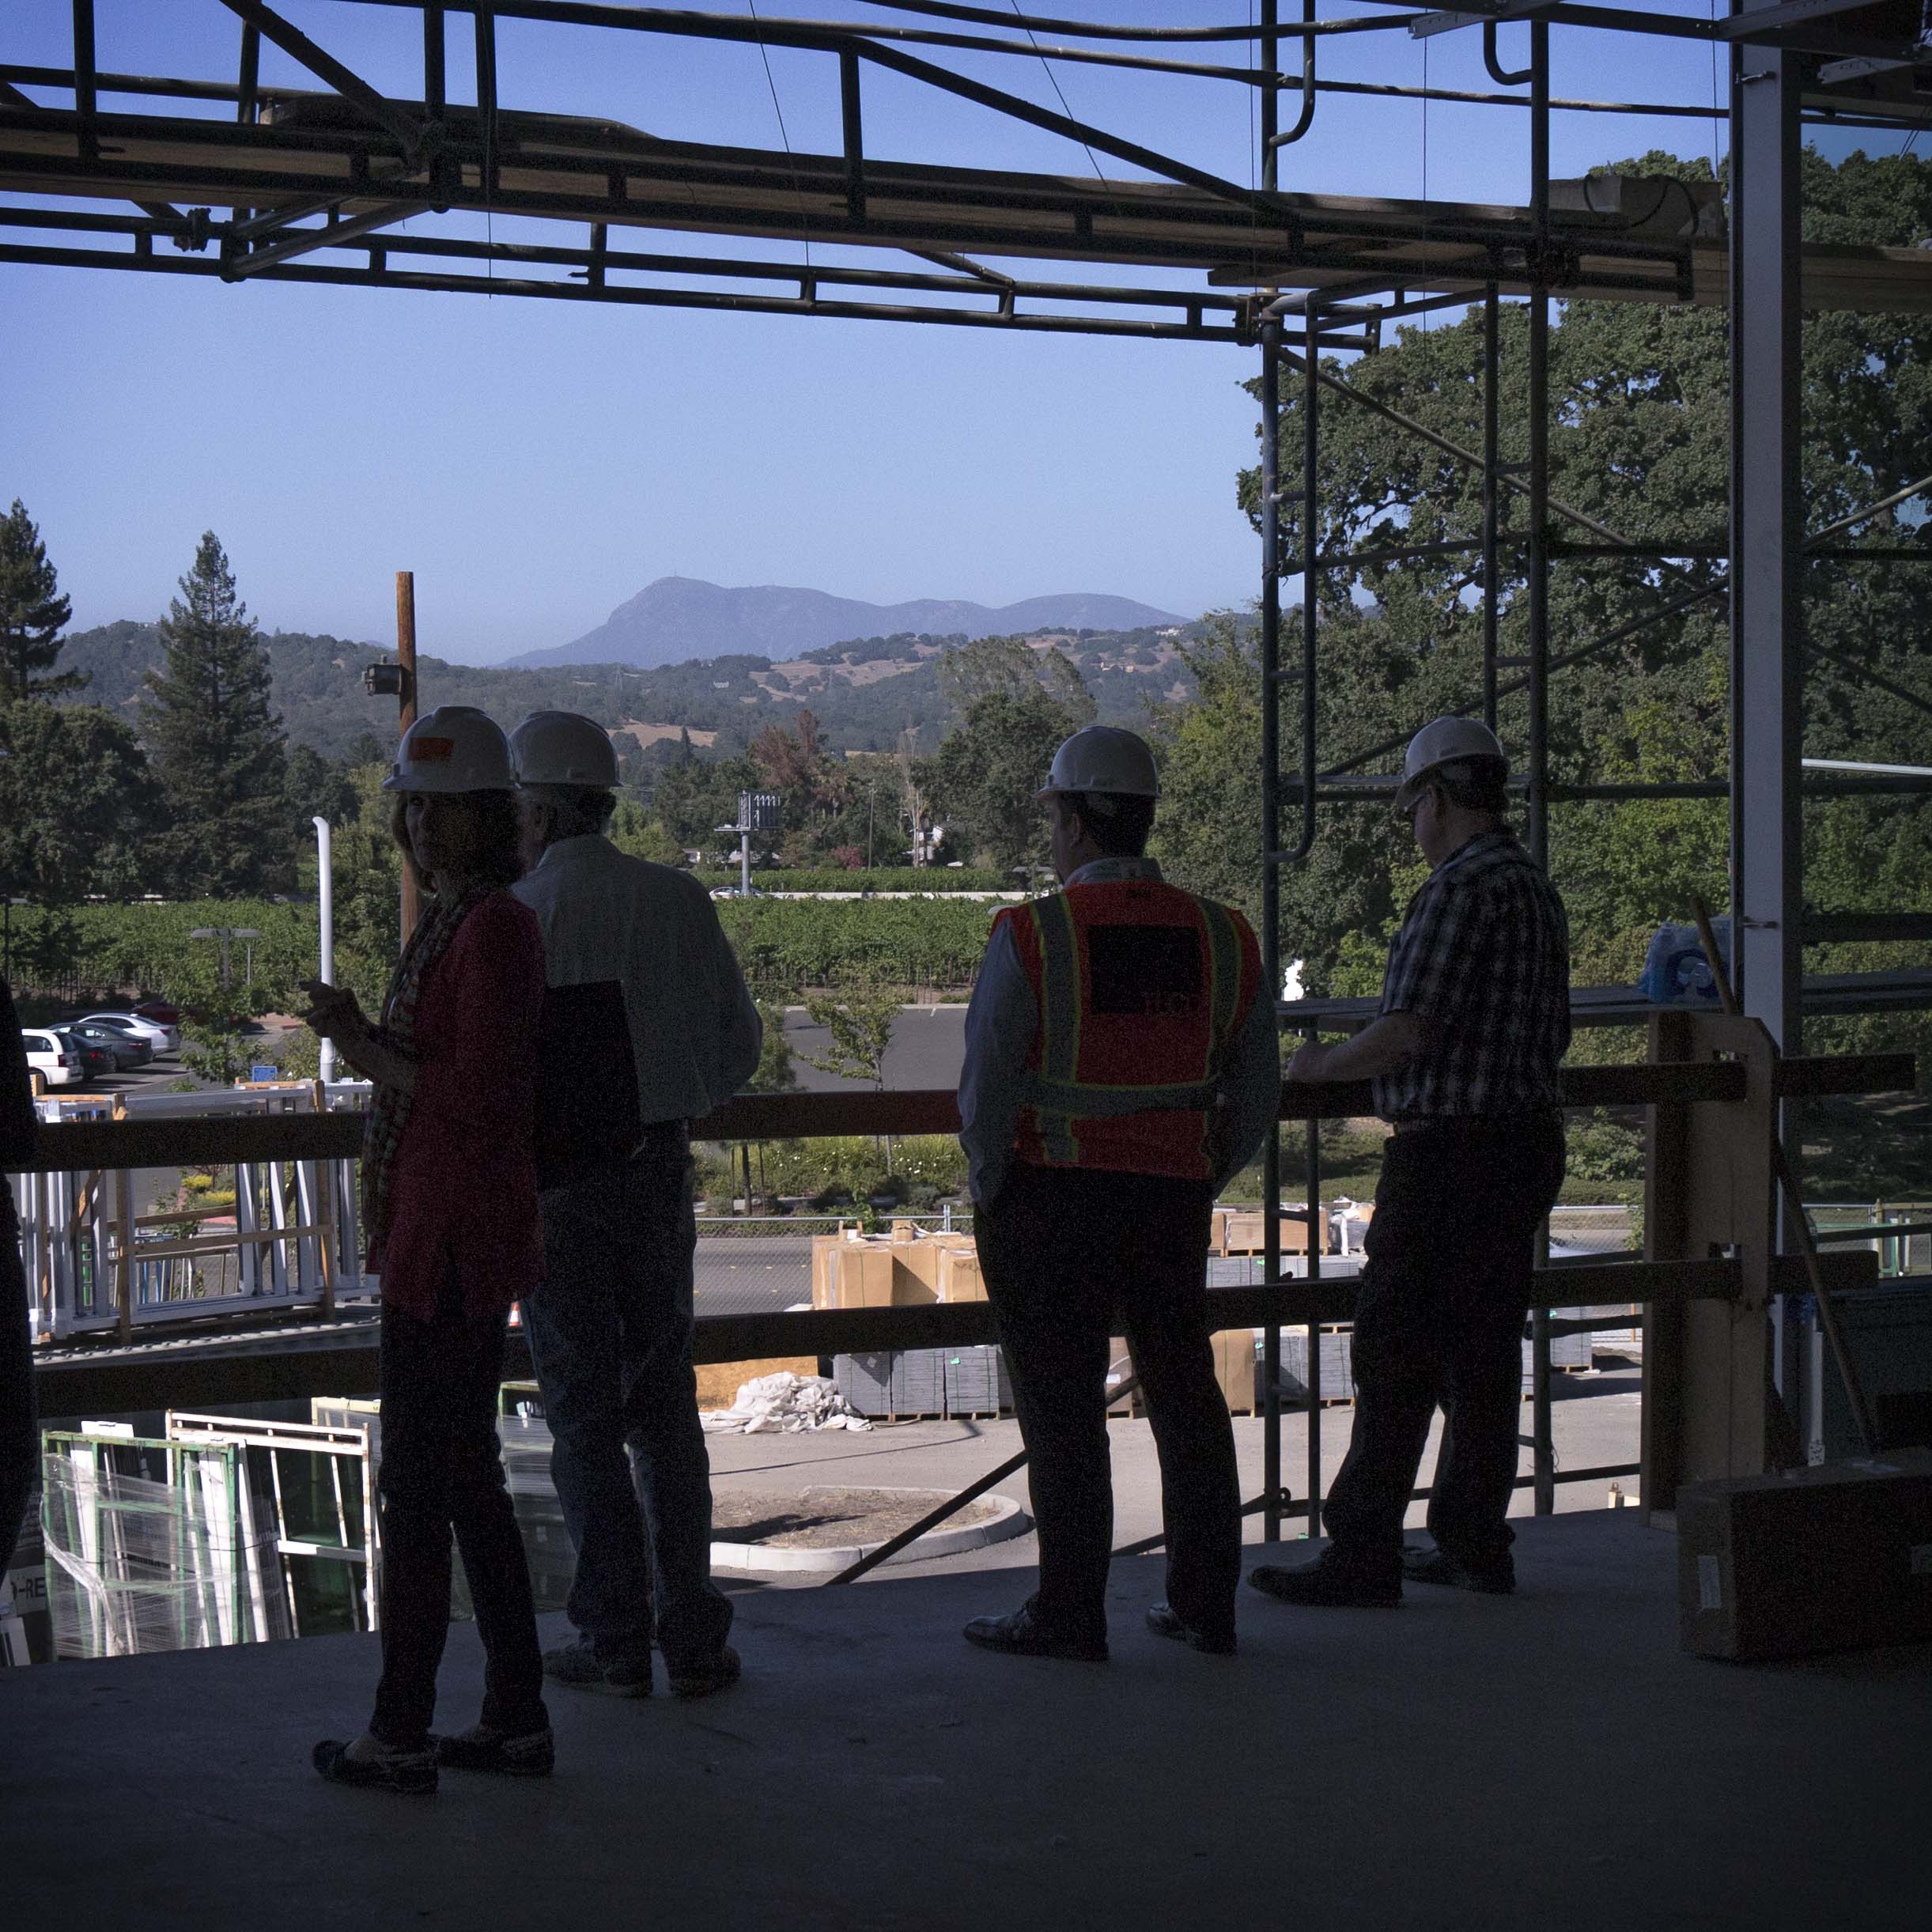 TLCD Architecture, American AgCredit Headquarters Building, Santa Rosa, CA, Staff Tour, Construction Update